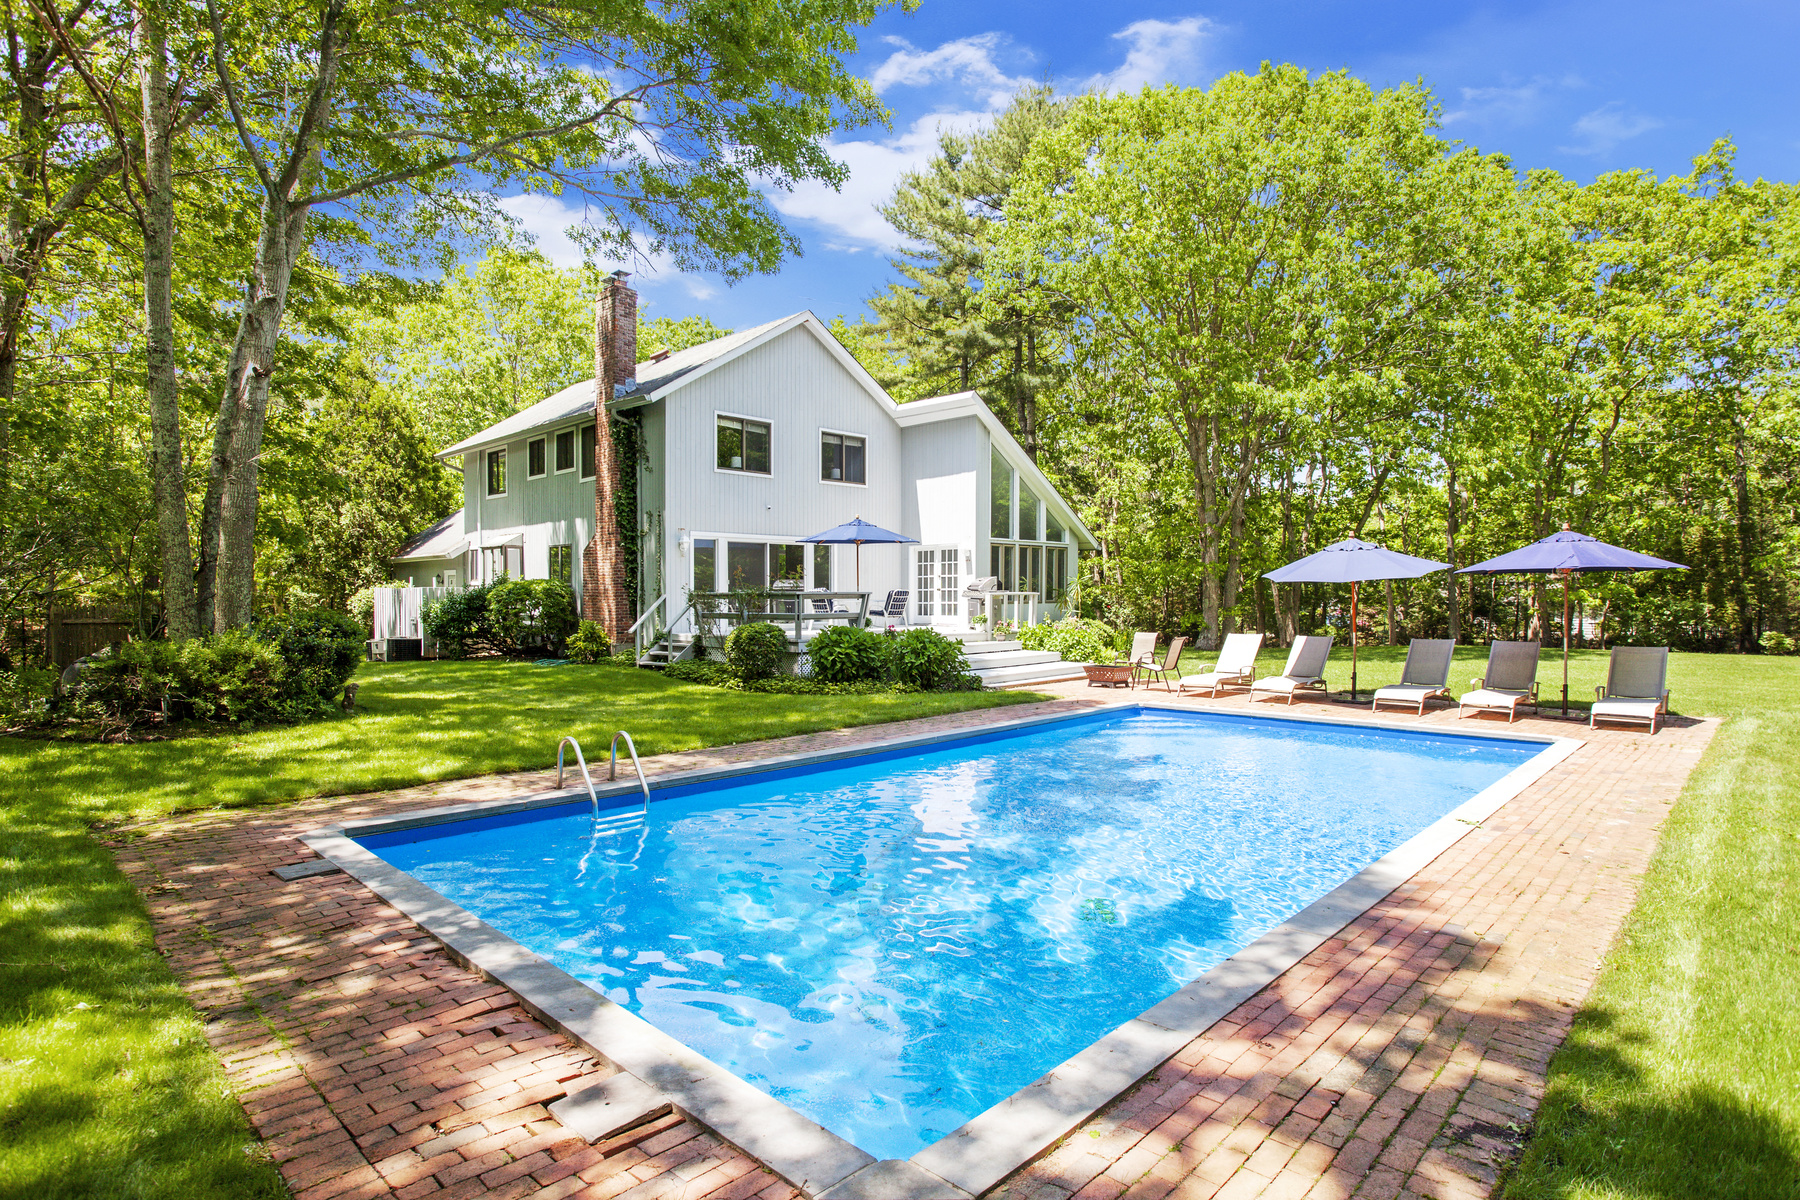 Rental Property at 468 Water Mill Towd Road, Southampton, Hamptons, NY - Bedrooms: 3 
Bathrooms: 2.5  - $25,000 MO.